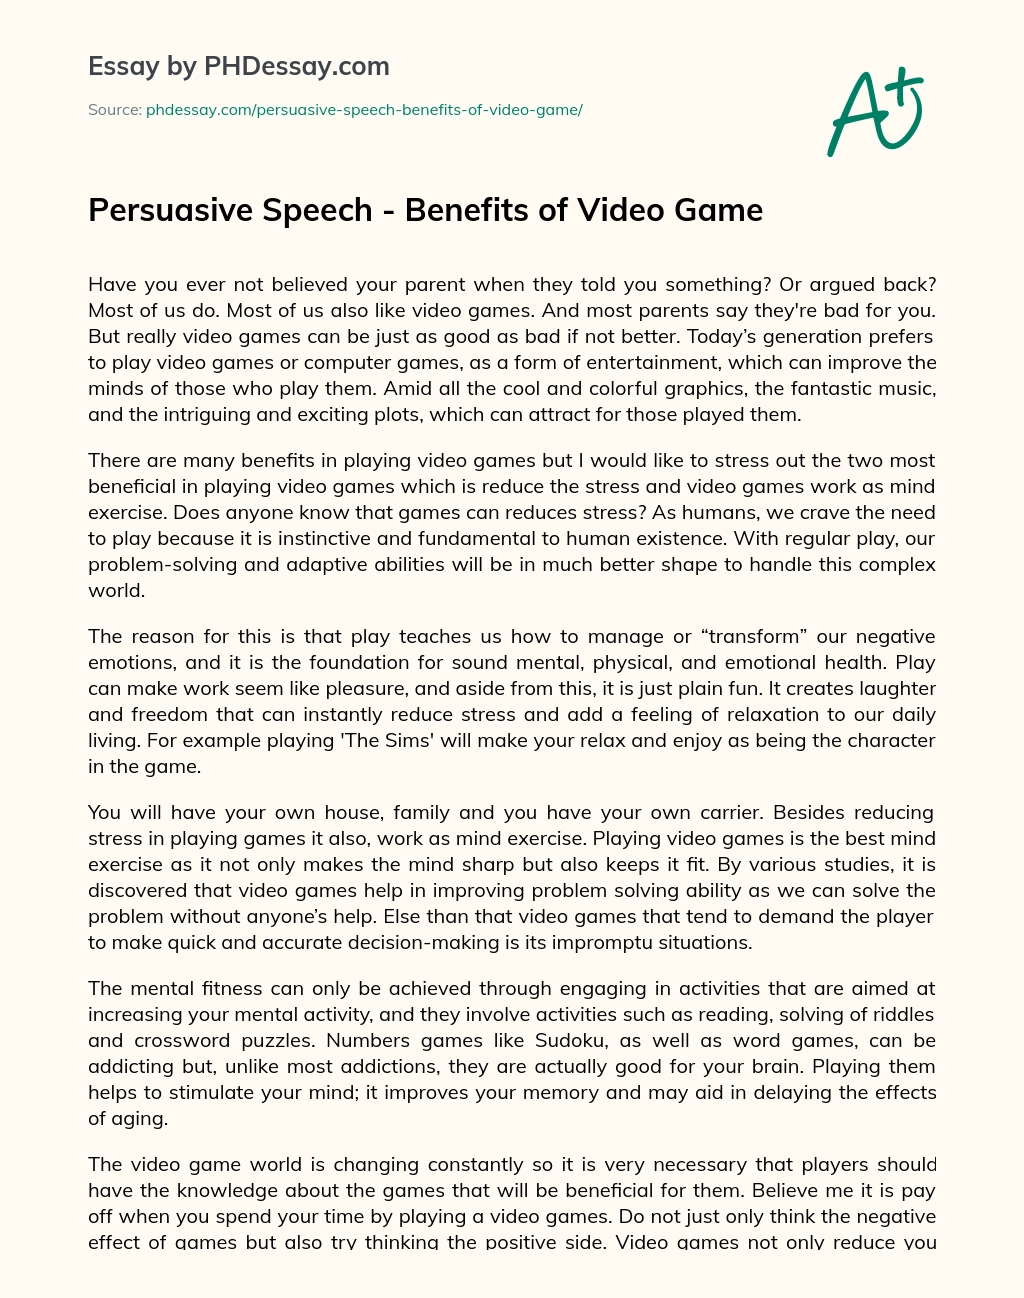 Buy essay 500 words examples of persuasive speeches